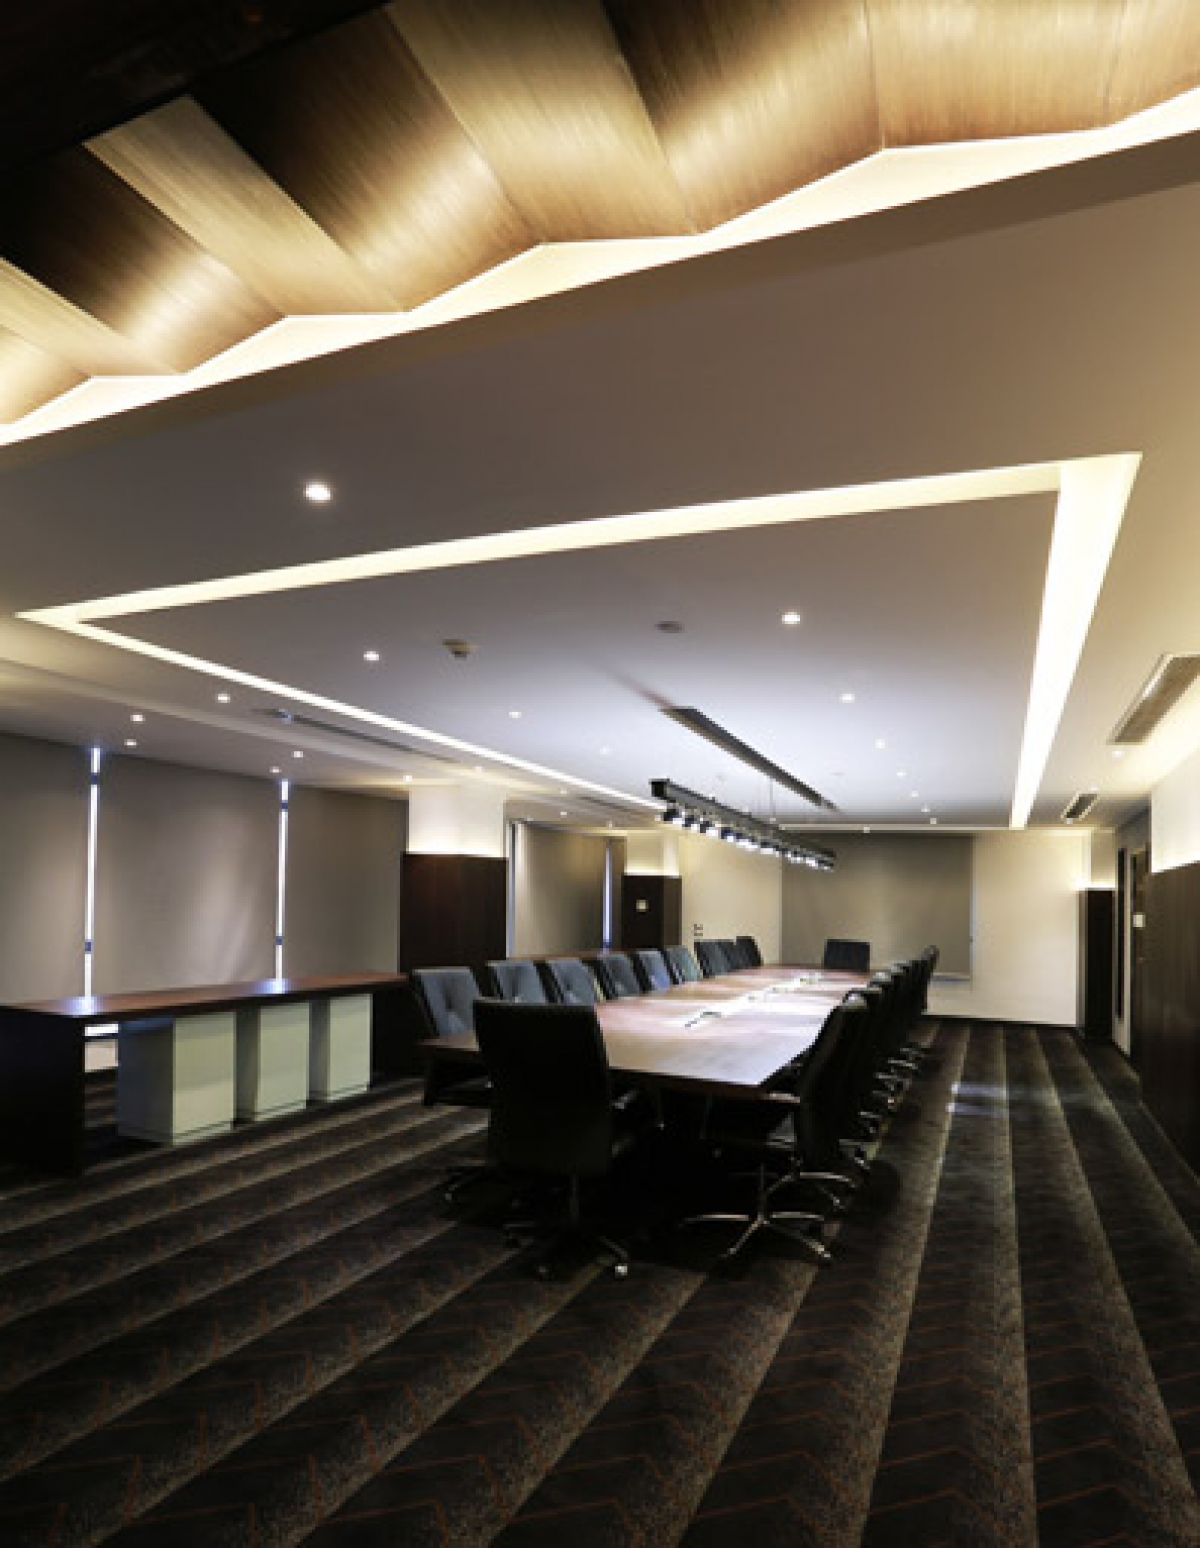 MedRight Meeting Room | Hazem Hassan Designs